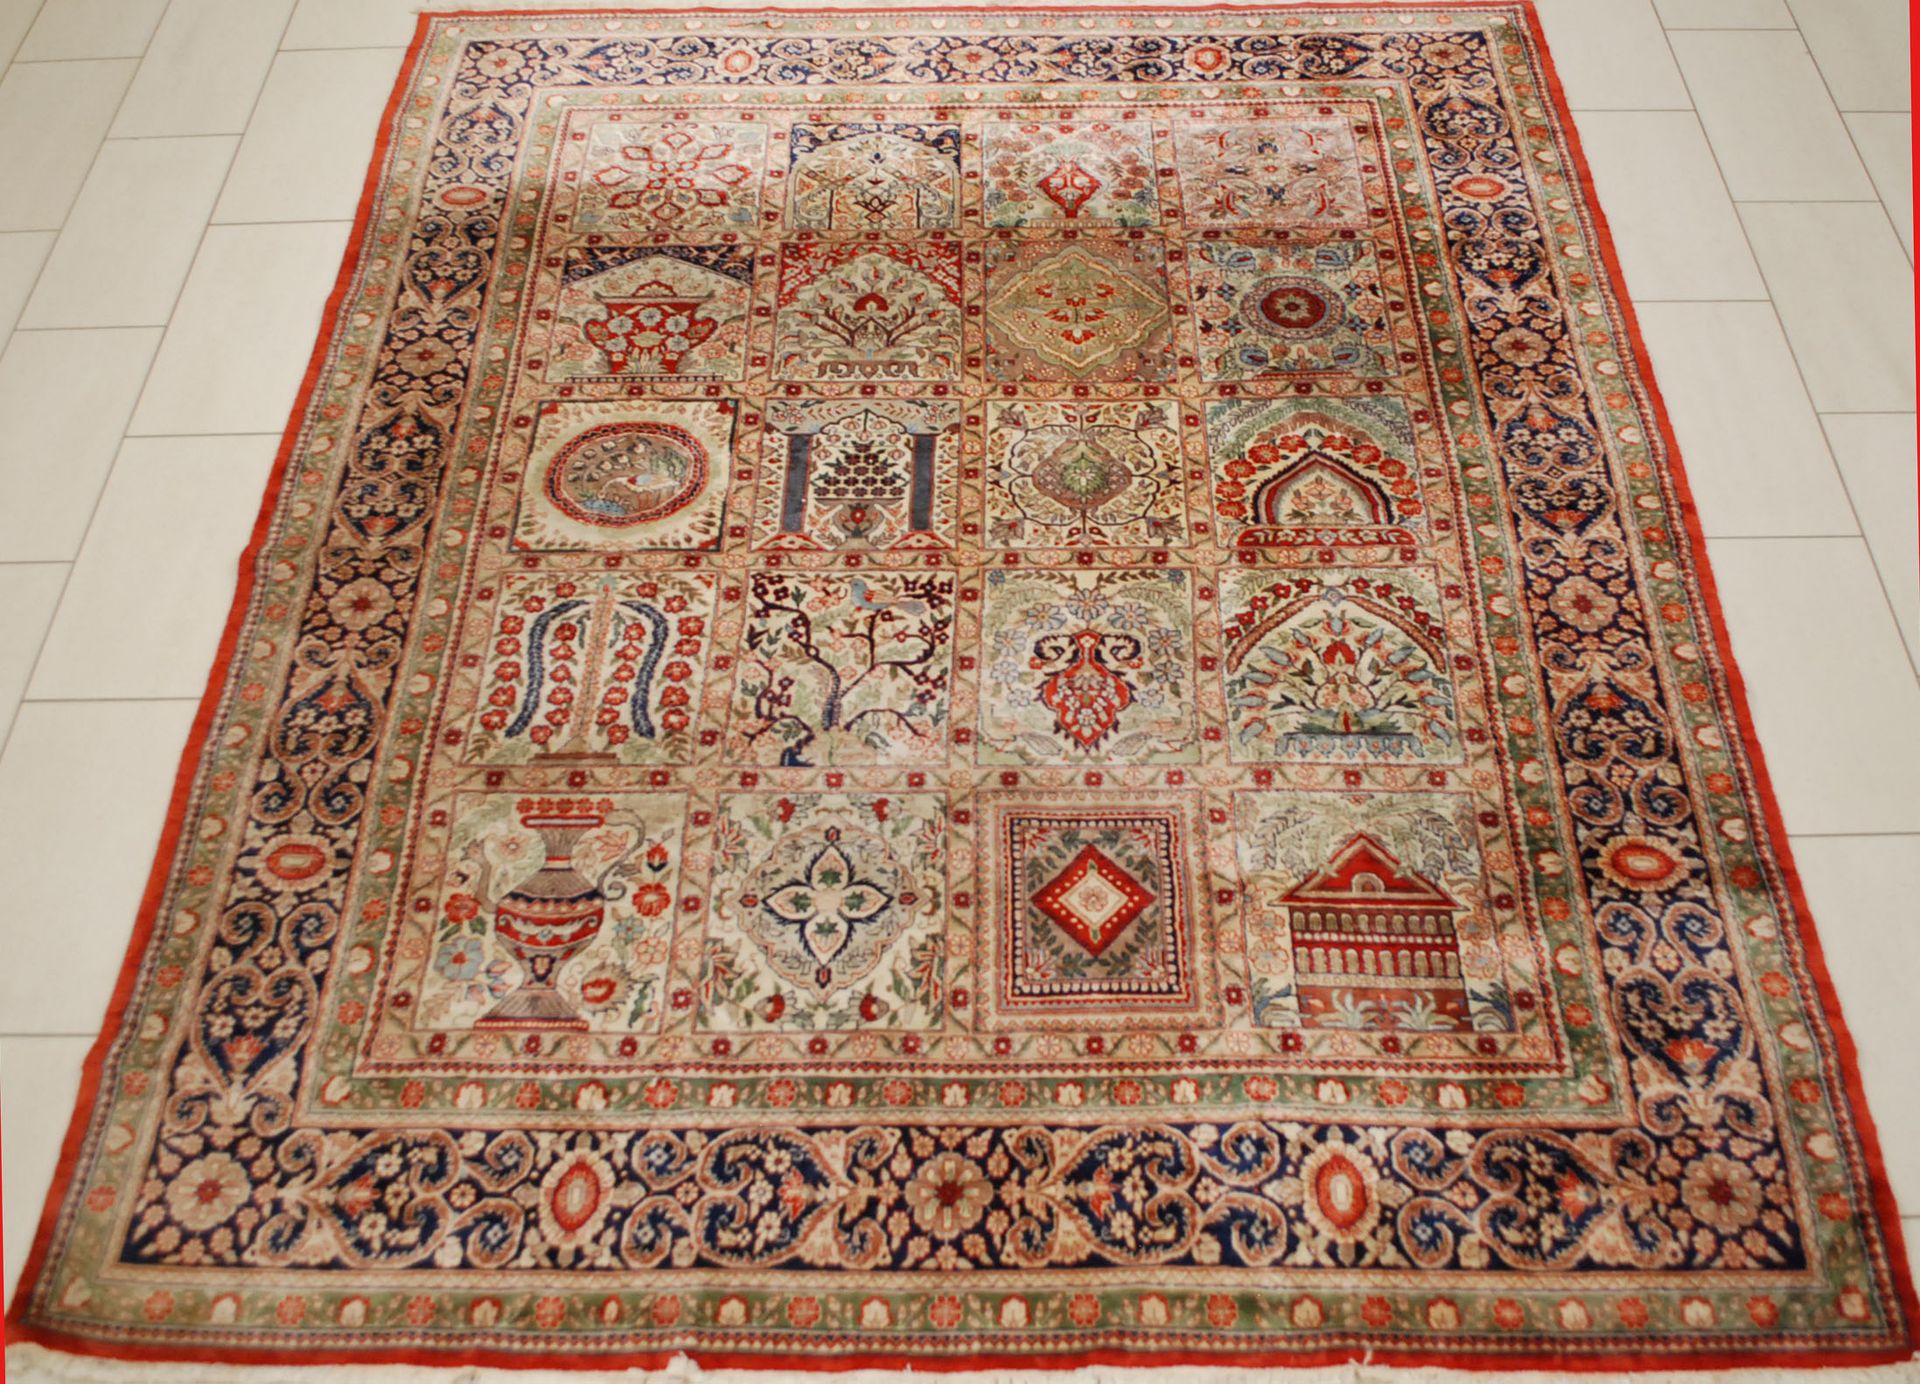 Travail iranien. Goum carpet 100 % silk.

Size: 296 x 244 cm.